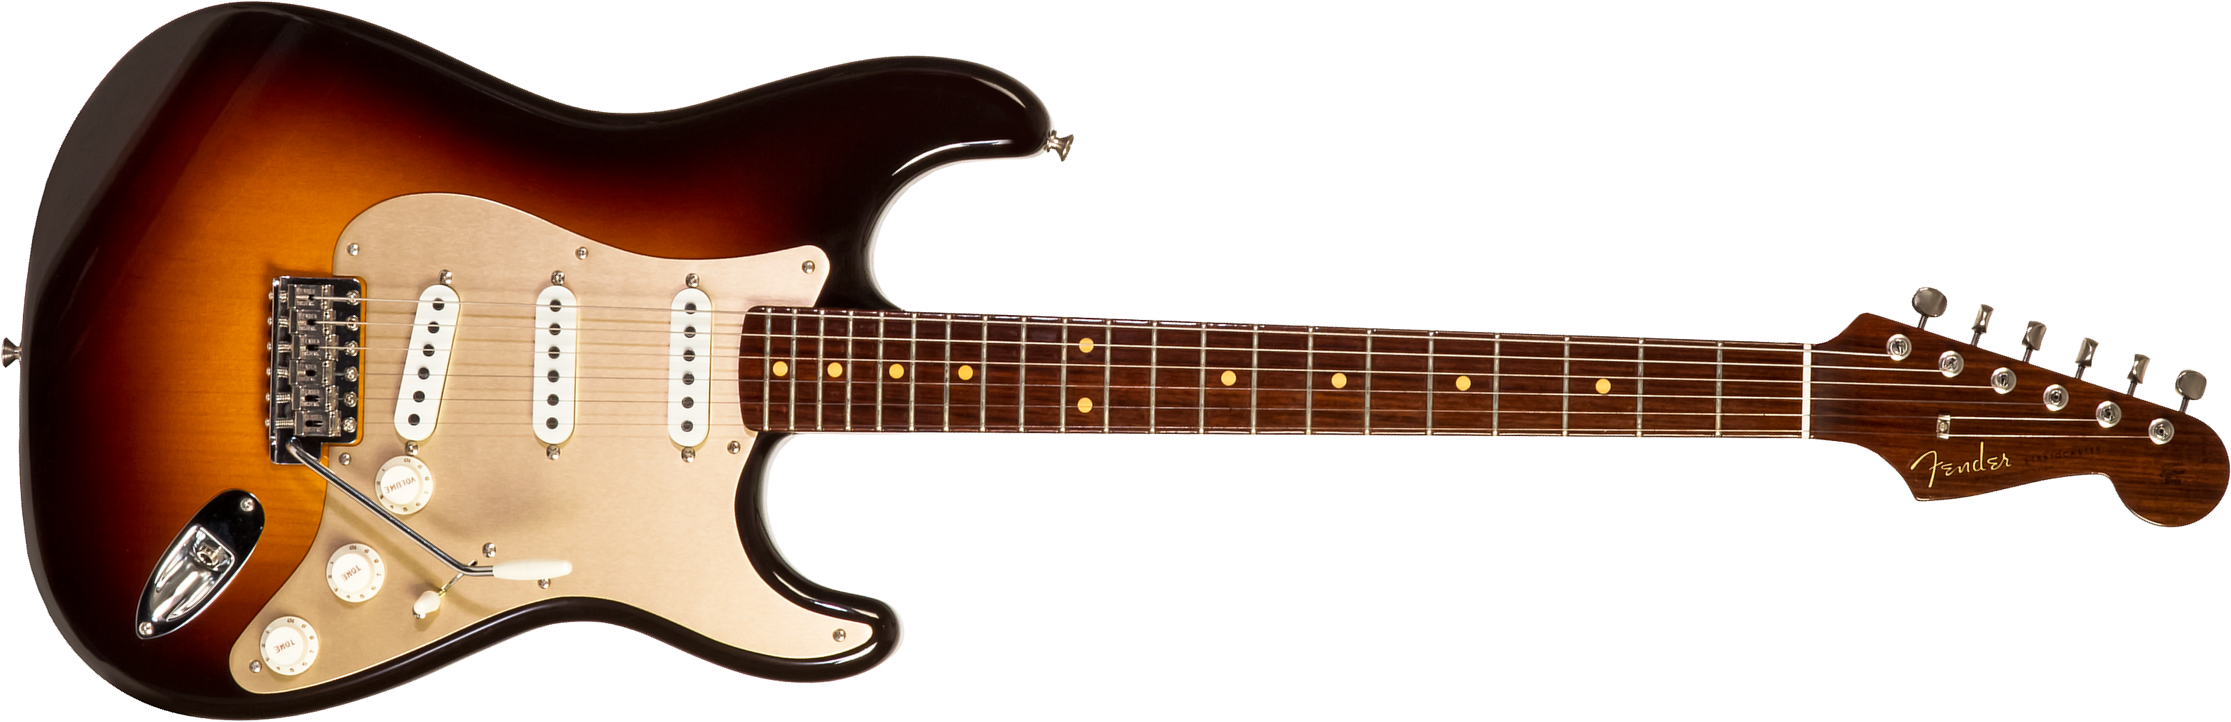 Fender Custom Shop Strat 1957 3s Trem Rw #cz548509 - Closet Classic 2-color Sunburst - Guitarra eléctrica con forma de tel - Main picture